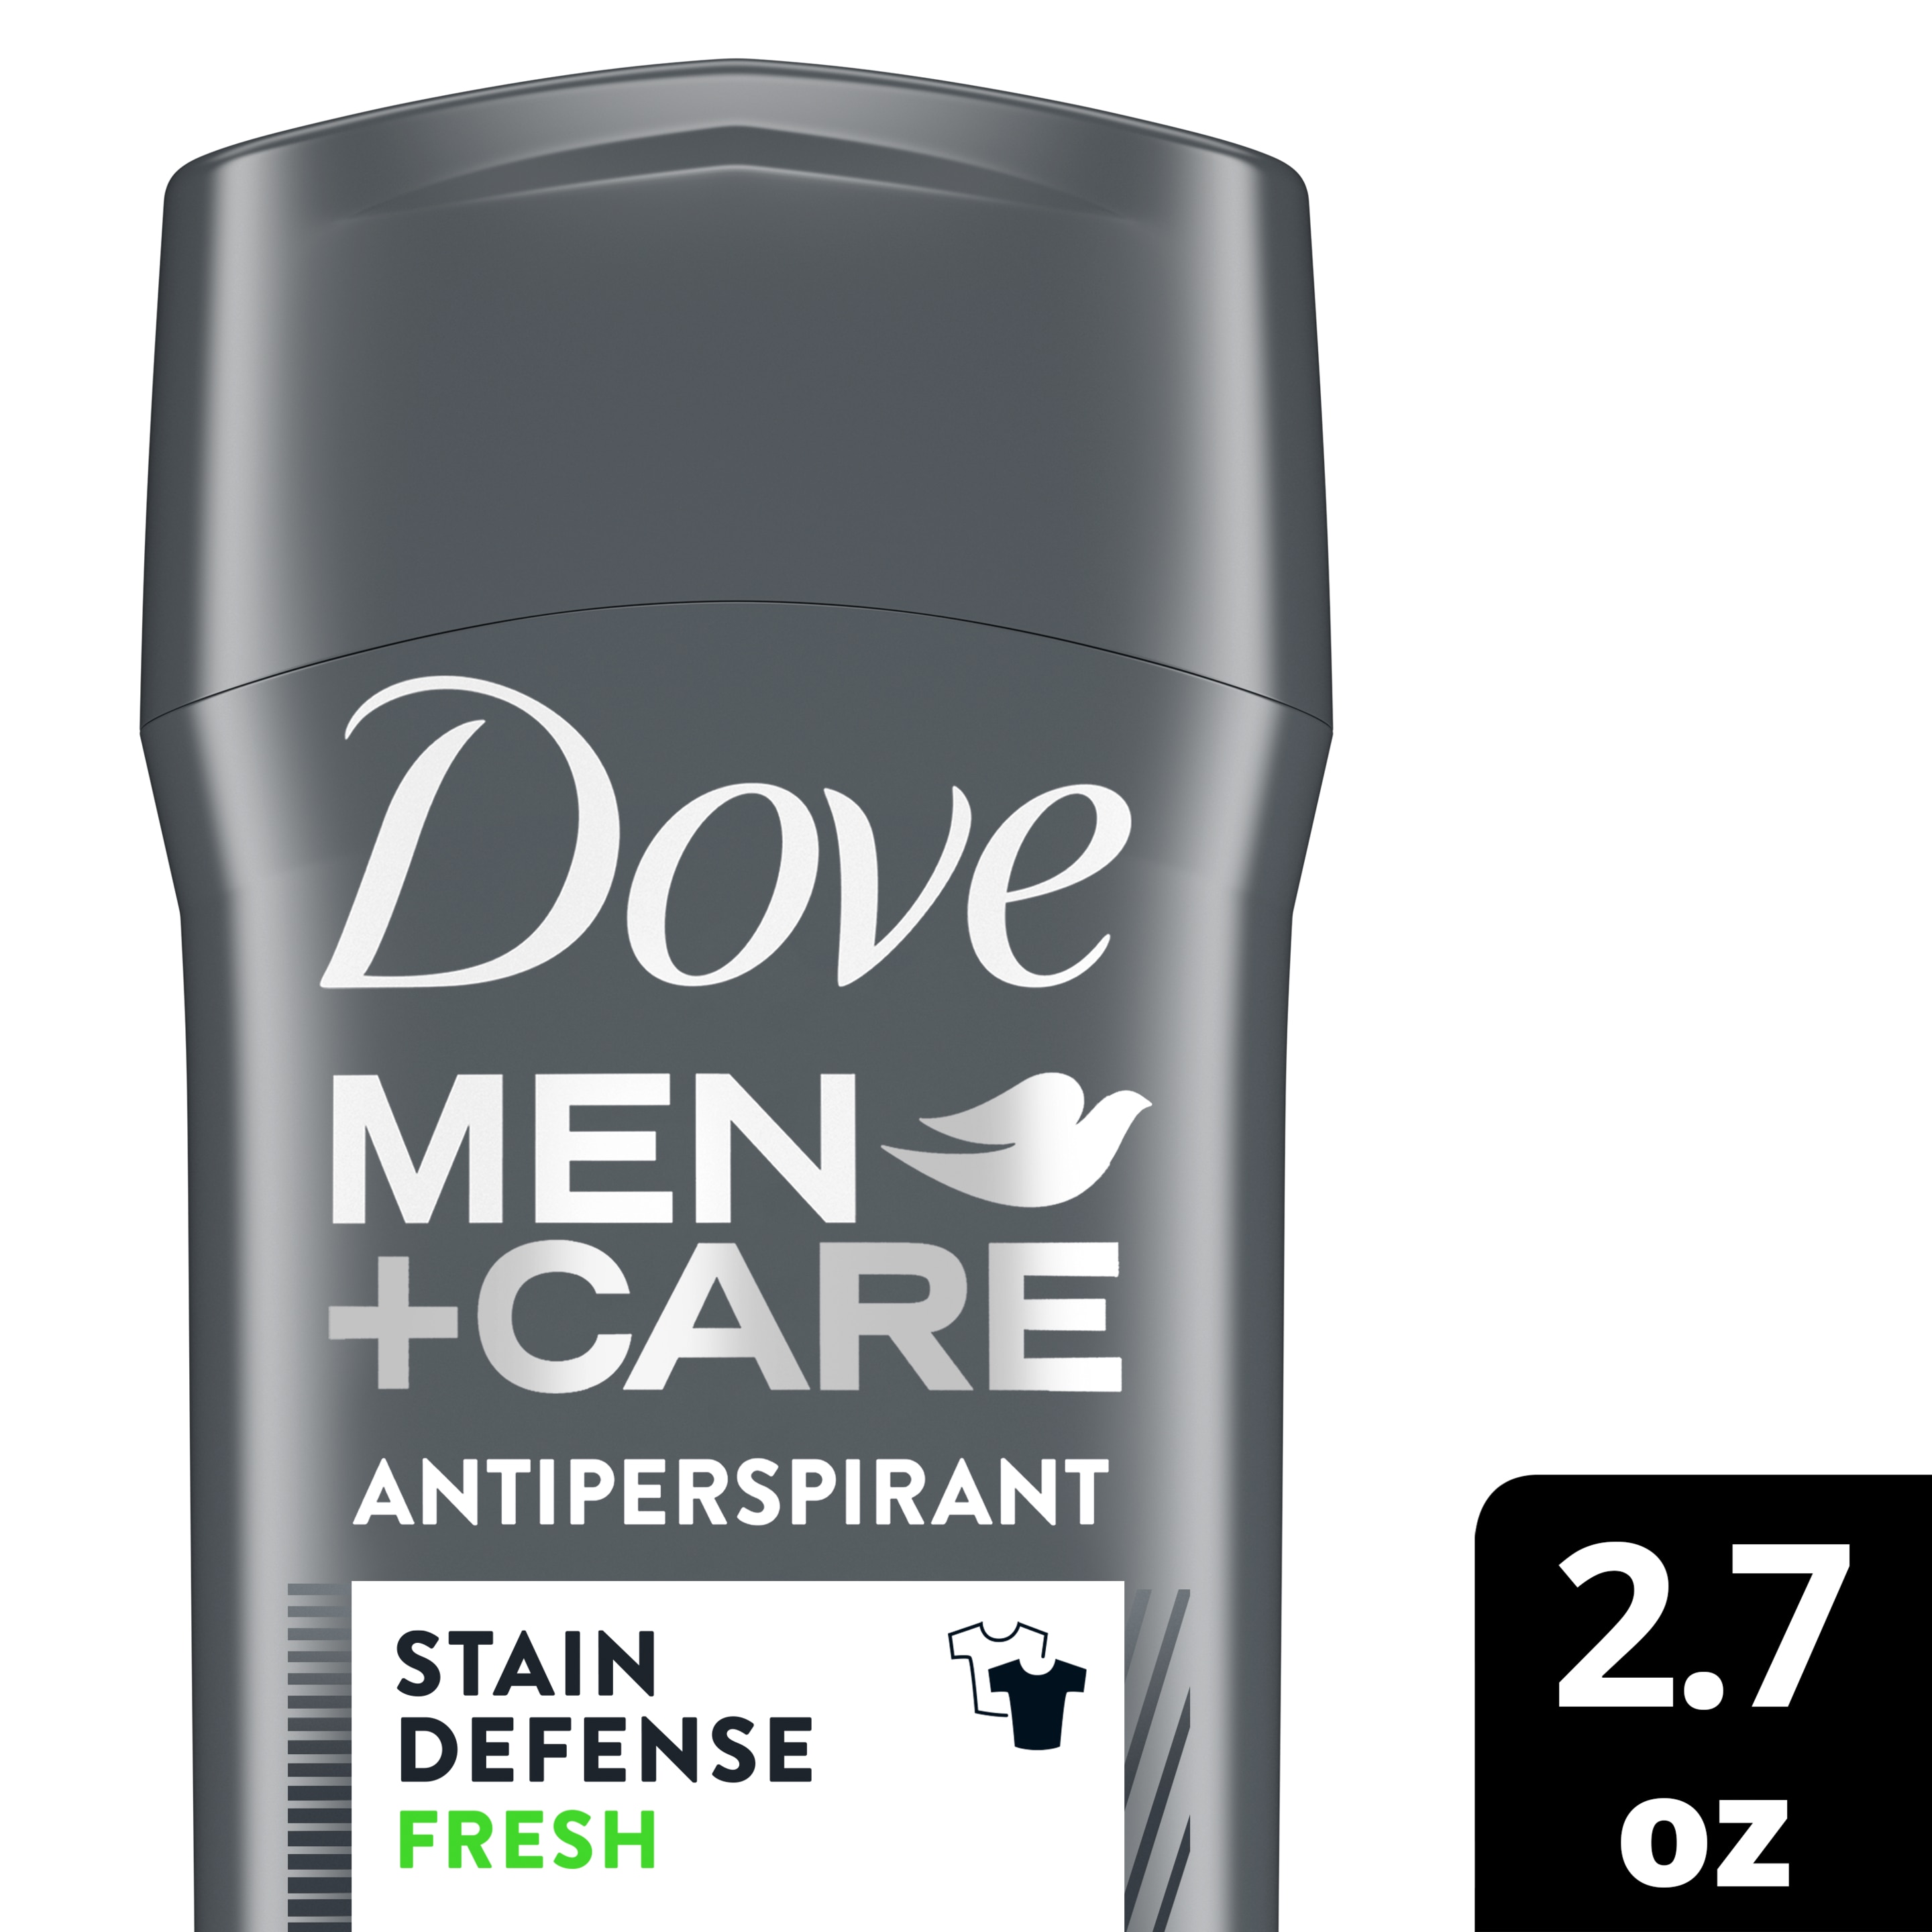 Dove Men+Care Stain Defense Antiperspirant Deodorant Stick Fresh 2.7 oz back